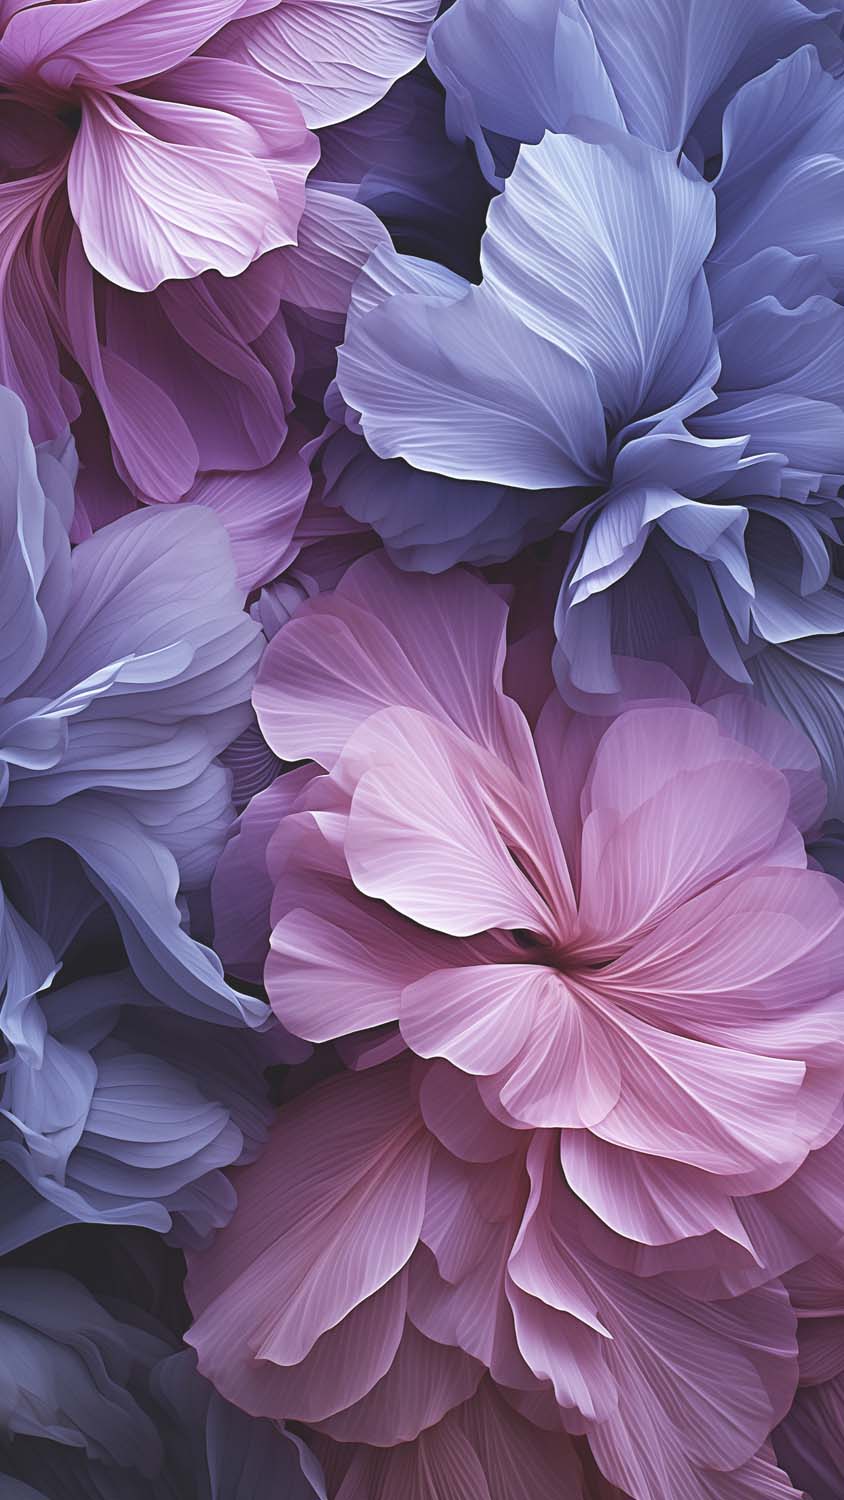 Flowers iOS iPhone Wallpaper